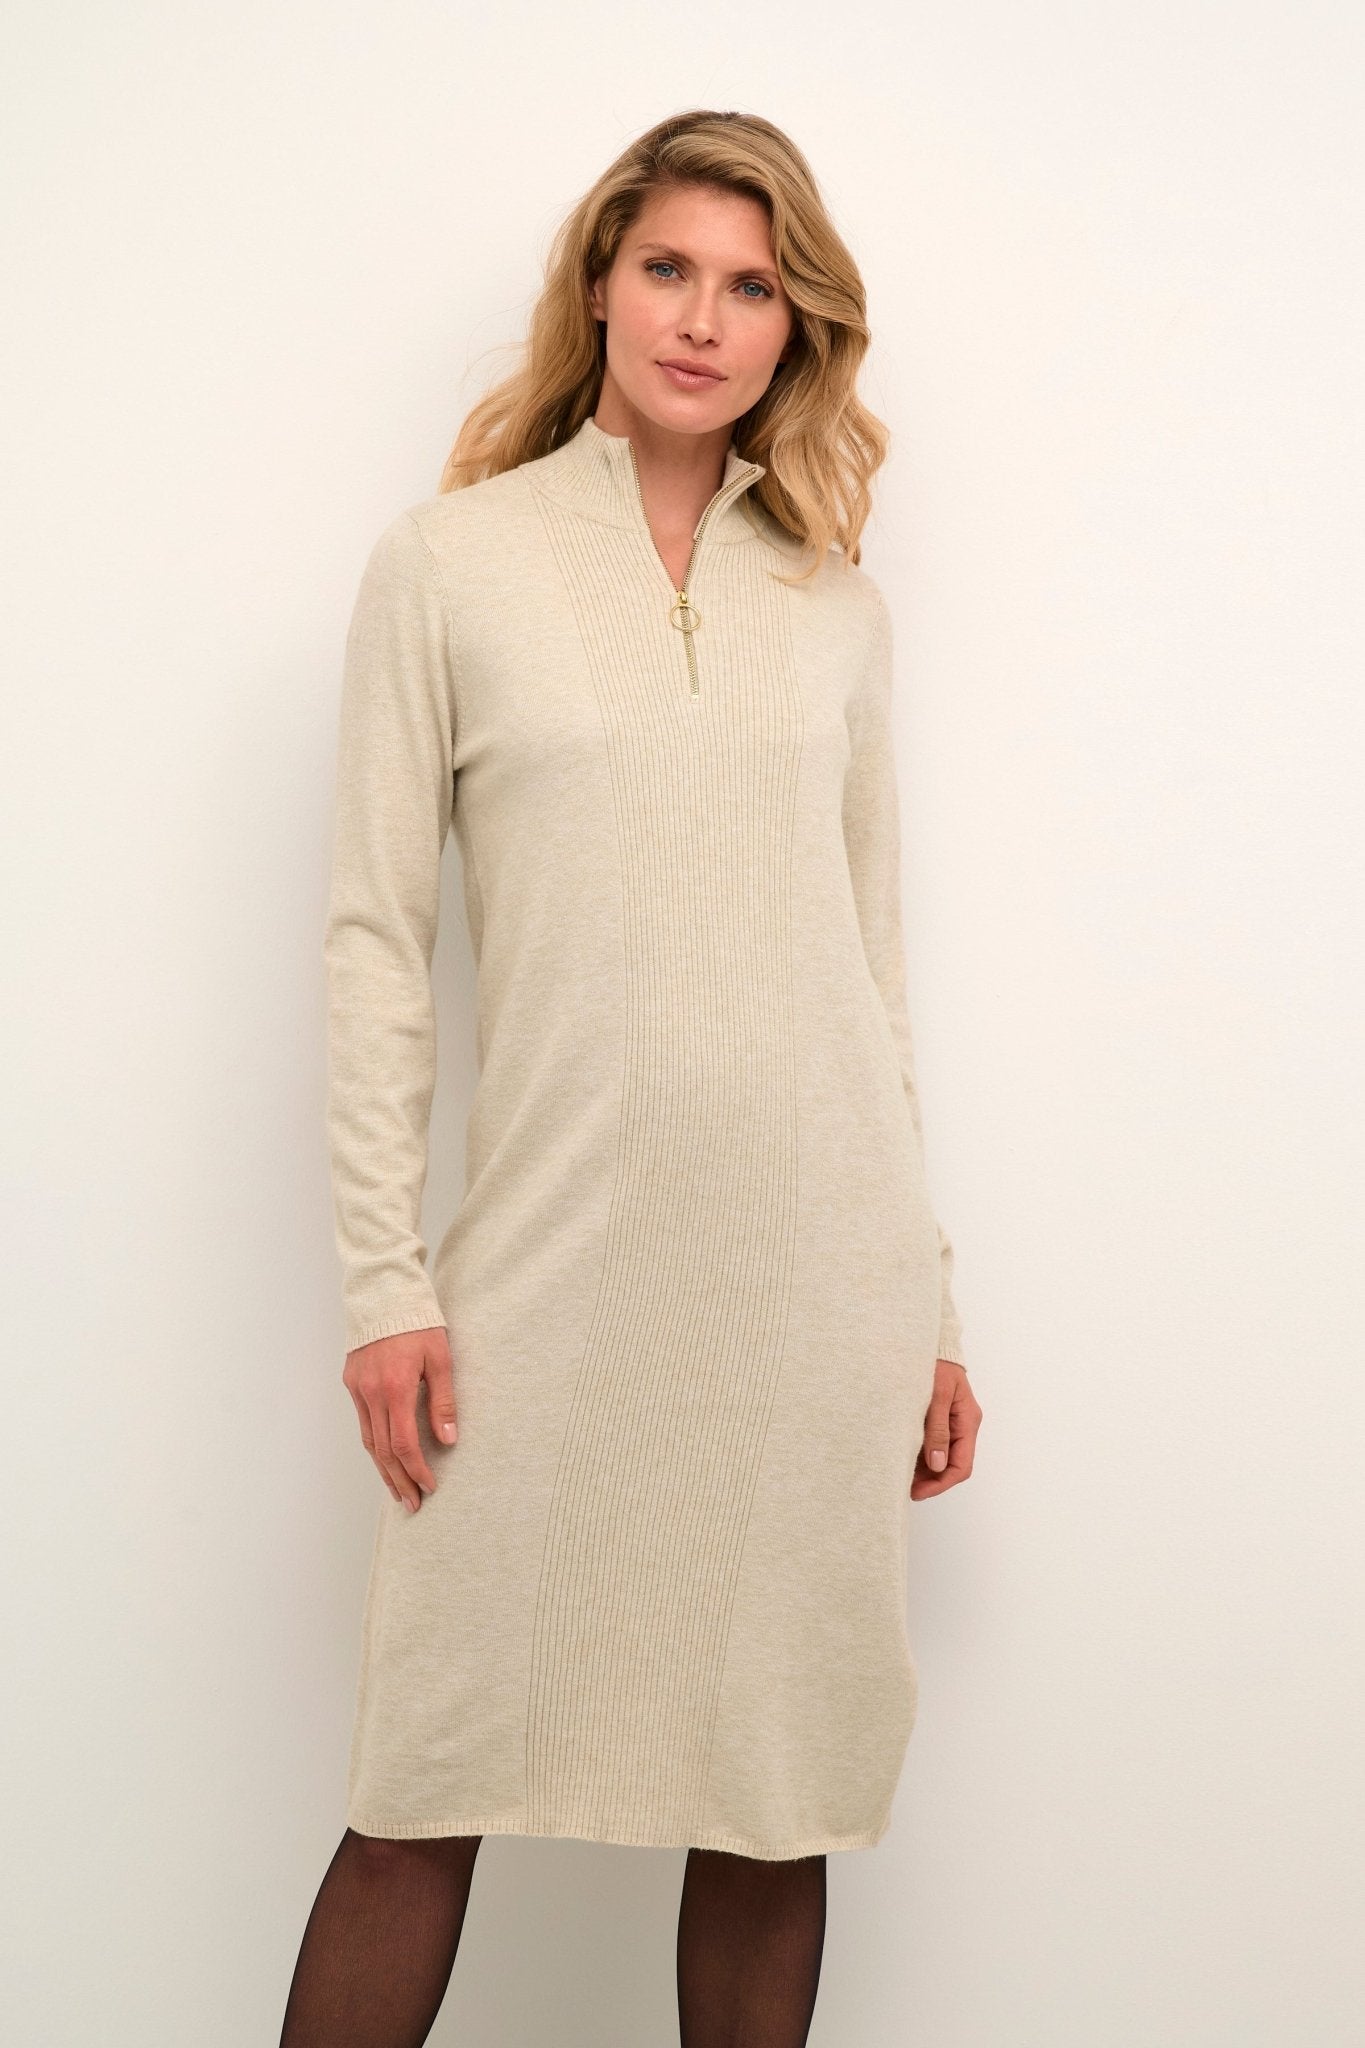 Dela knit dress by Cream - oat melange - Blue Sky Fashions & Lingerie